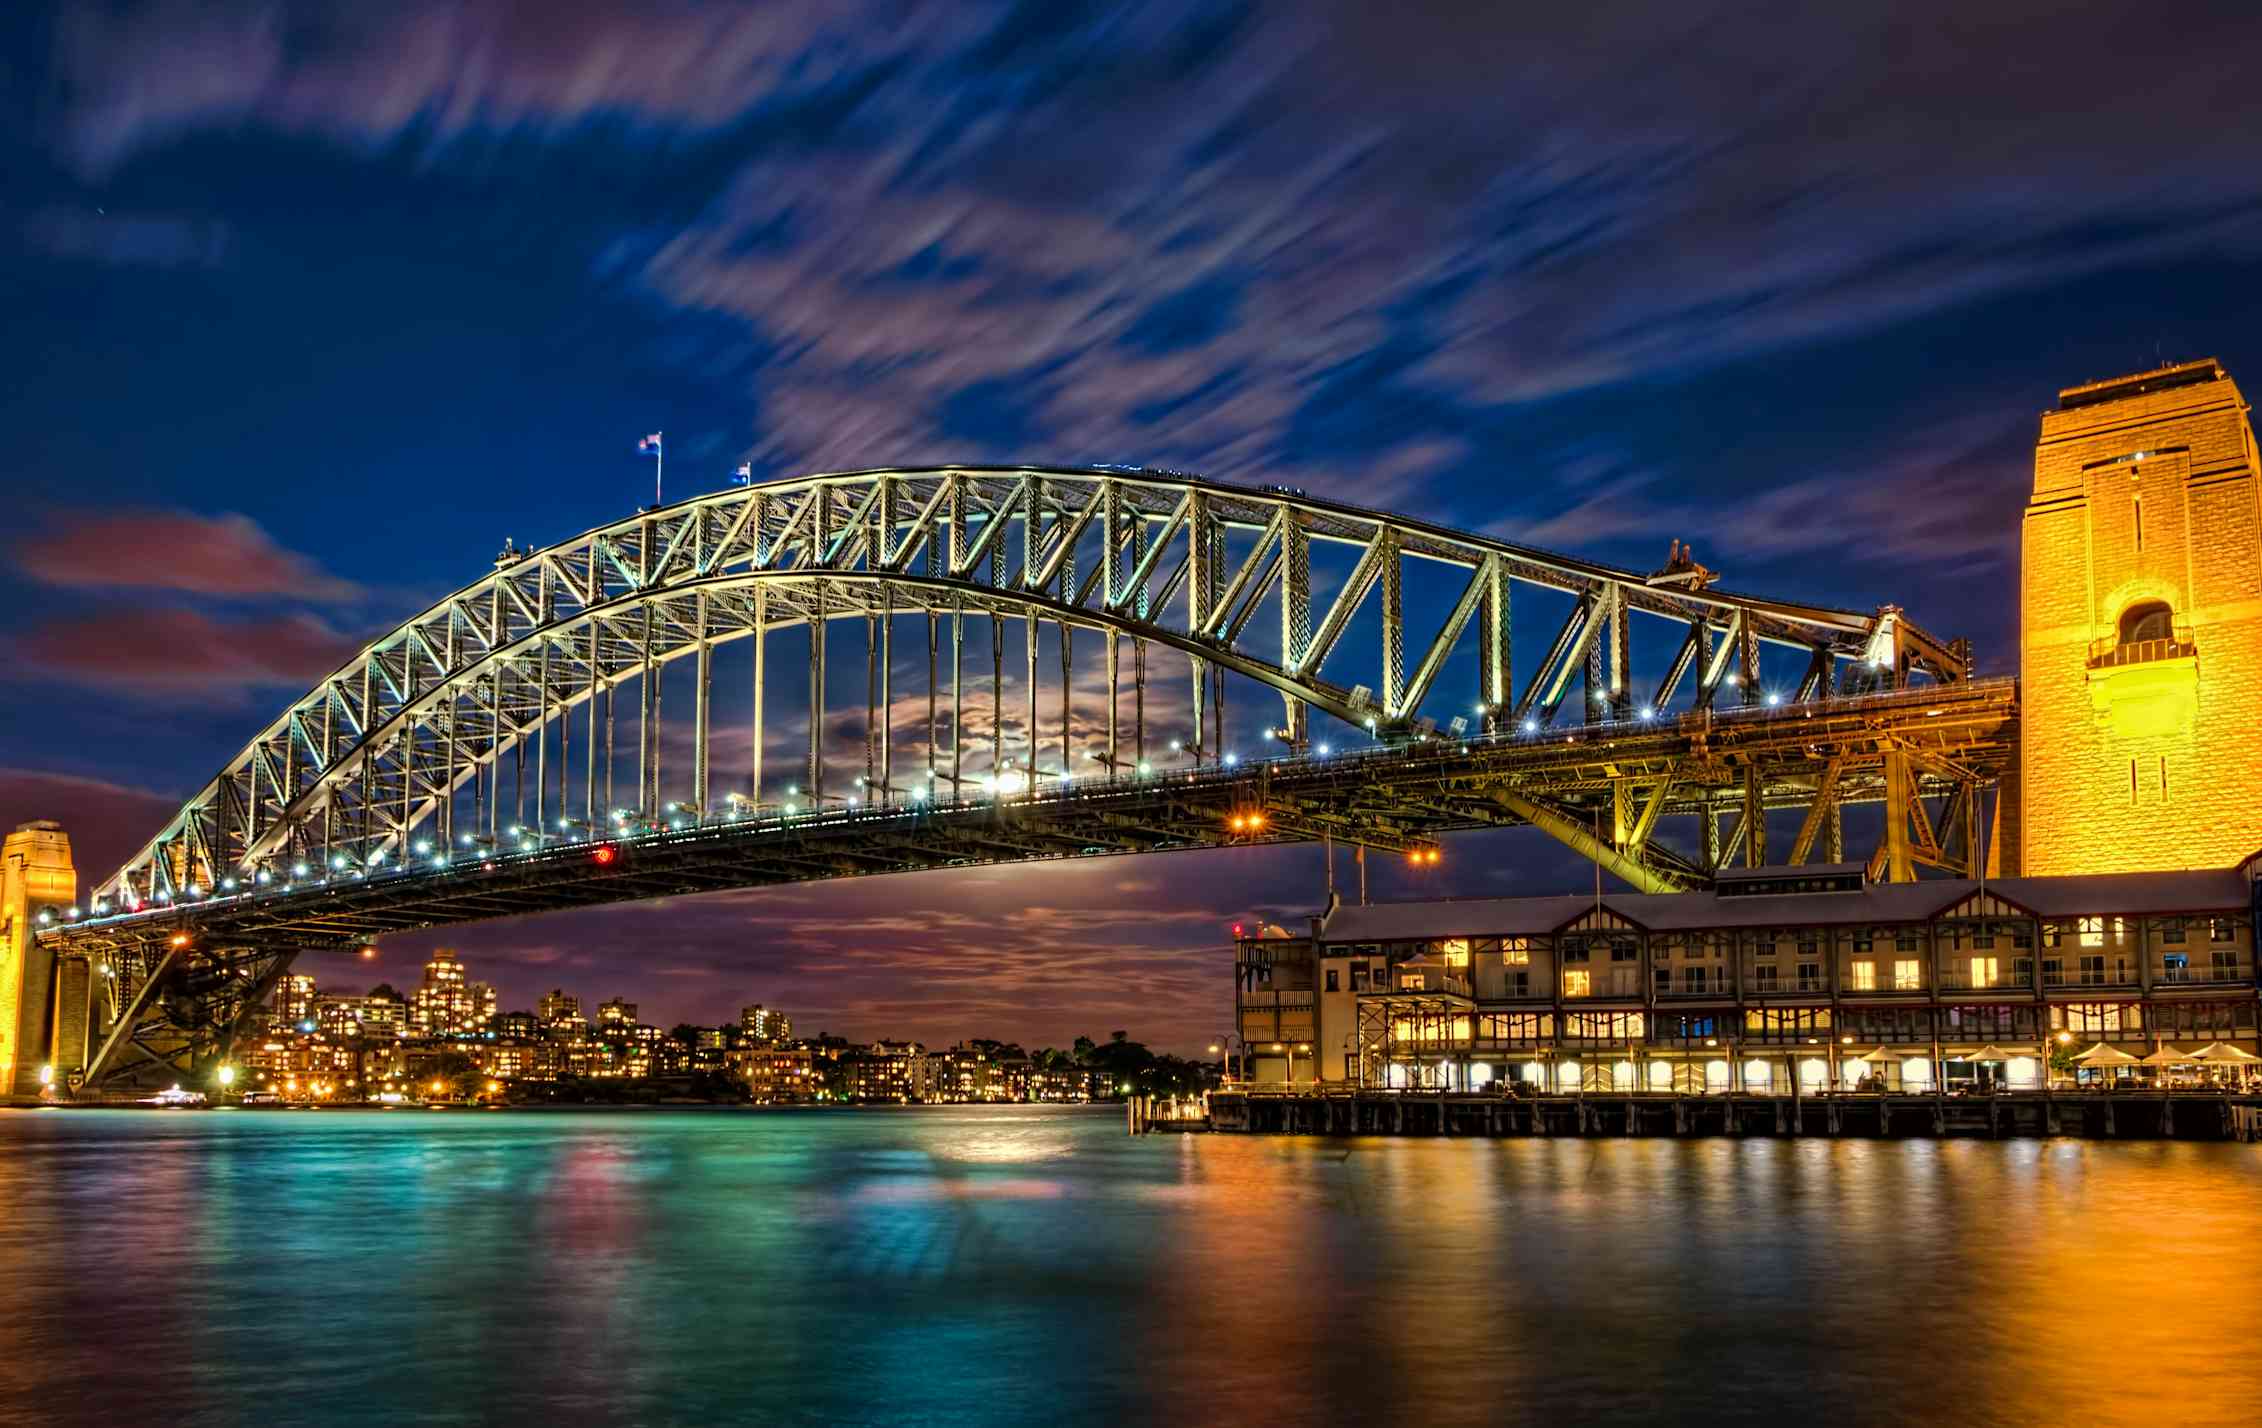 Harbour bridge. Харбор-бридж Сидней. Сиднейский мост Харбор-бридж. Арочный мост Харбор-бридж. Мост Харбор бридж в Австралии.